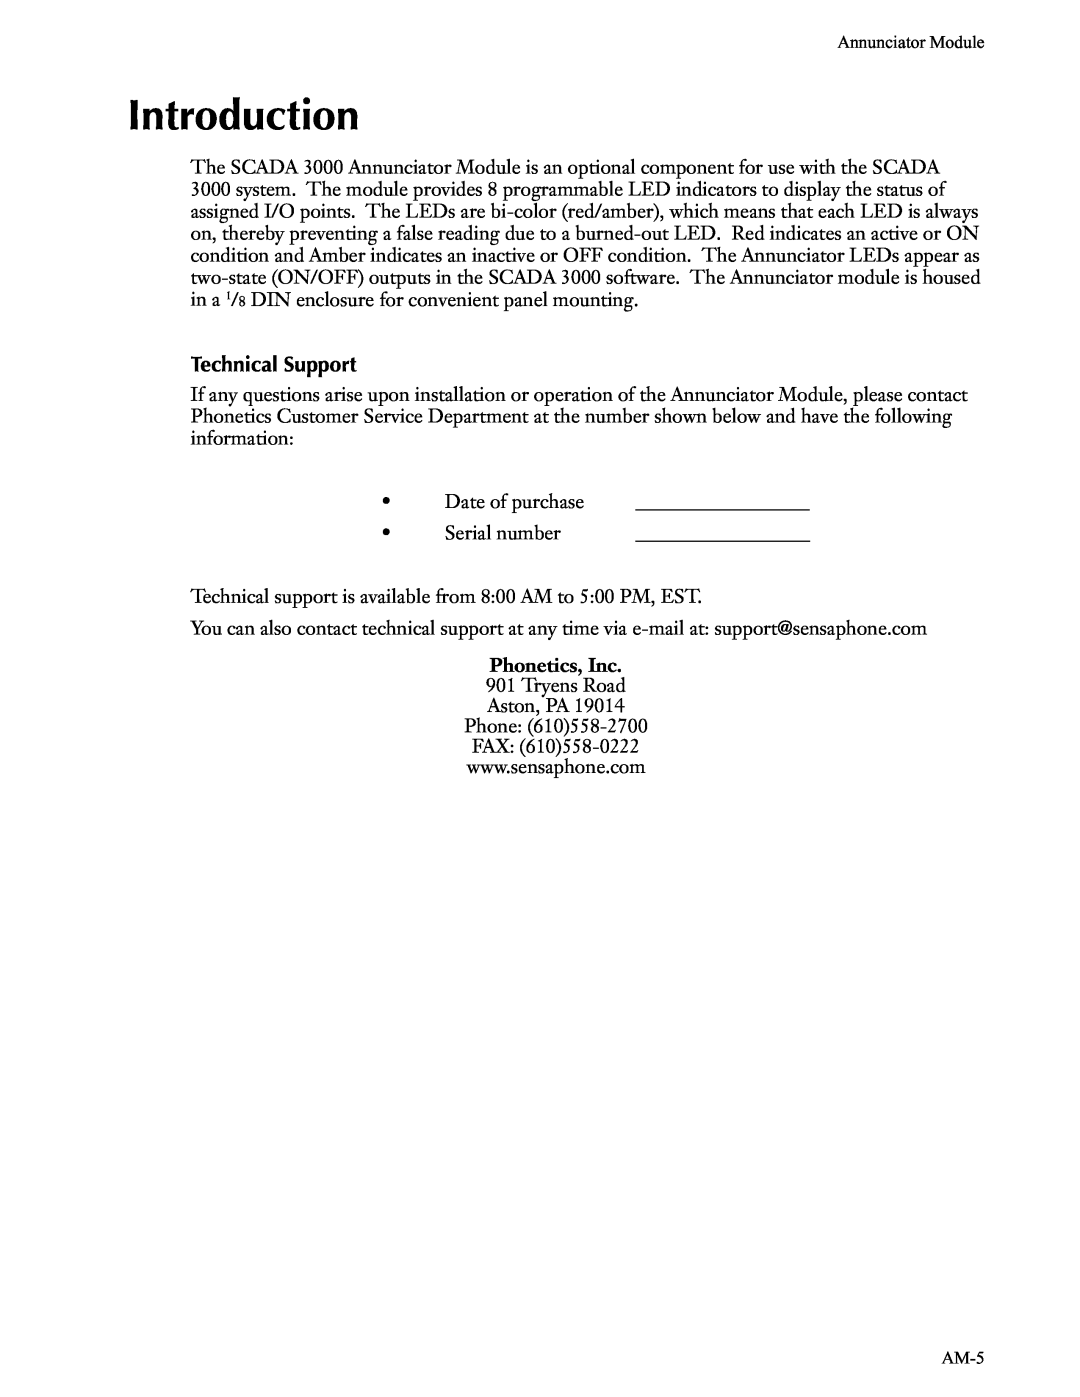 Phonetics SCADA 3000 manual Introduction, Technical Support, Phonetics, Inc 